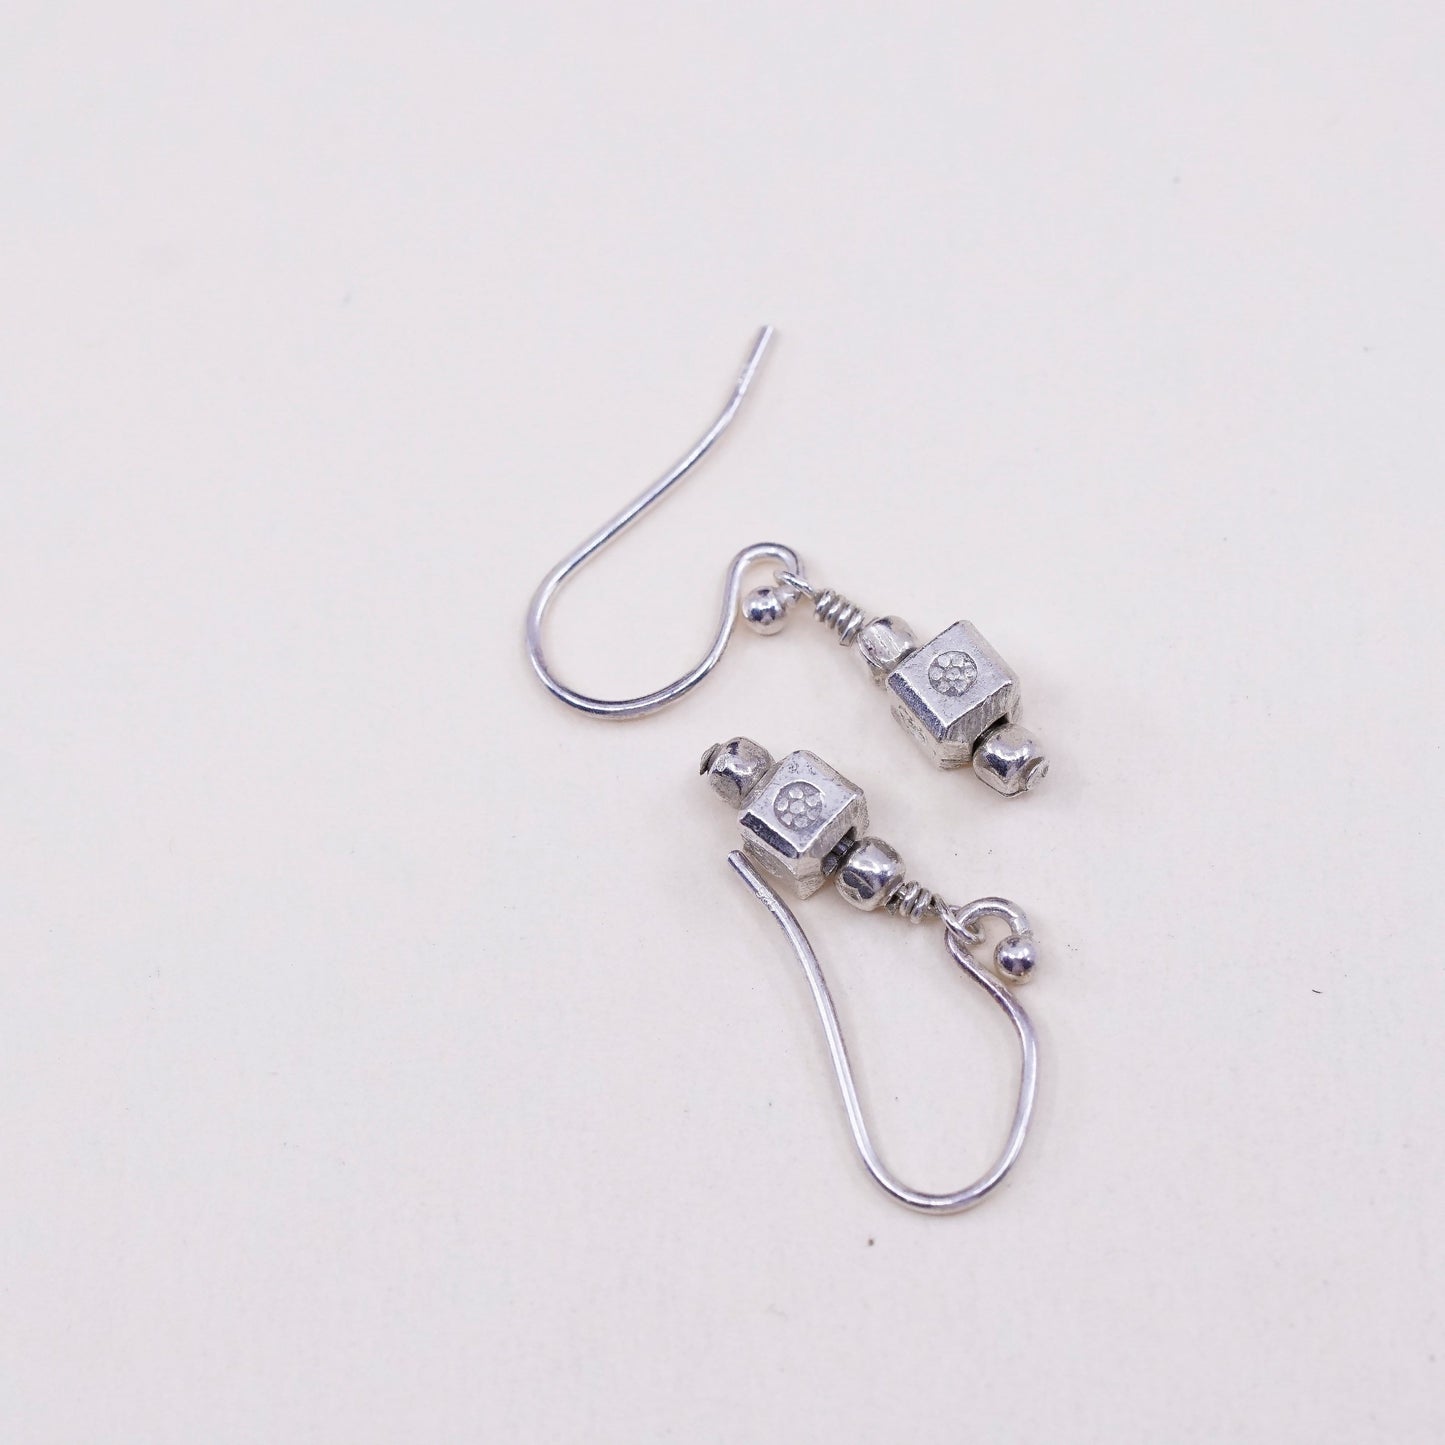 Vintage sterling silver handmade earrings, 925 beads dangles